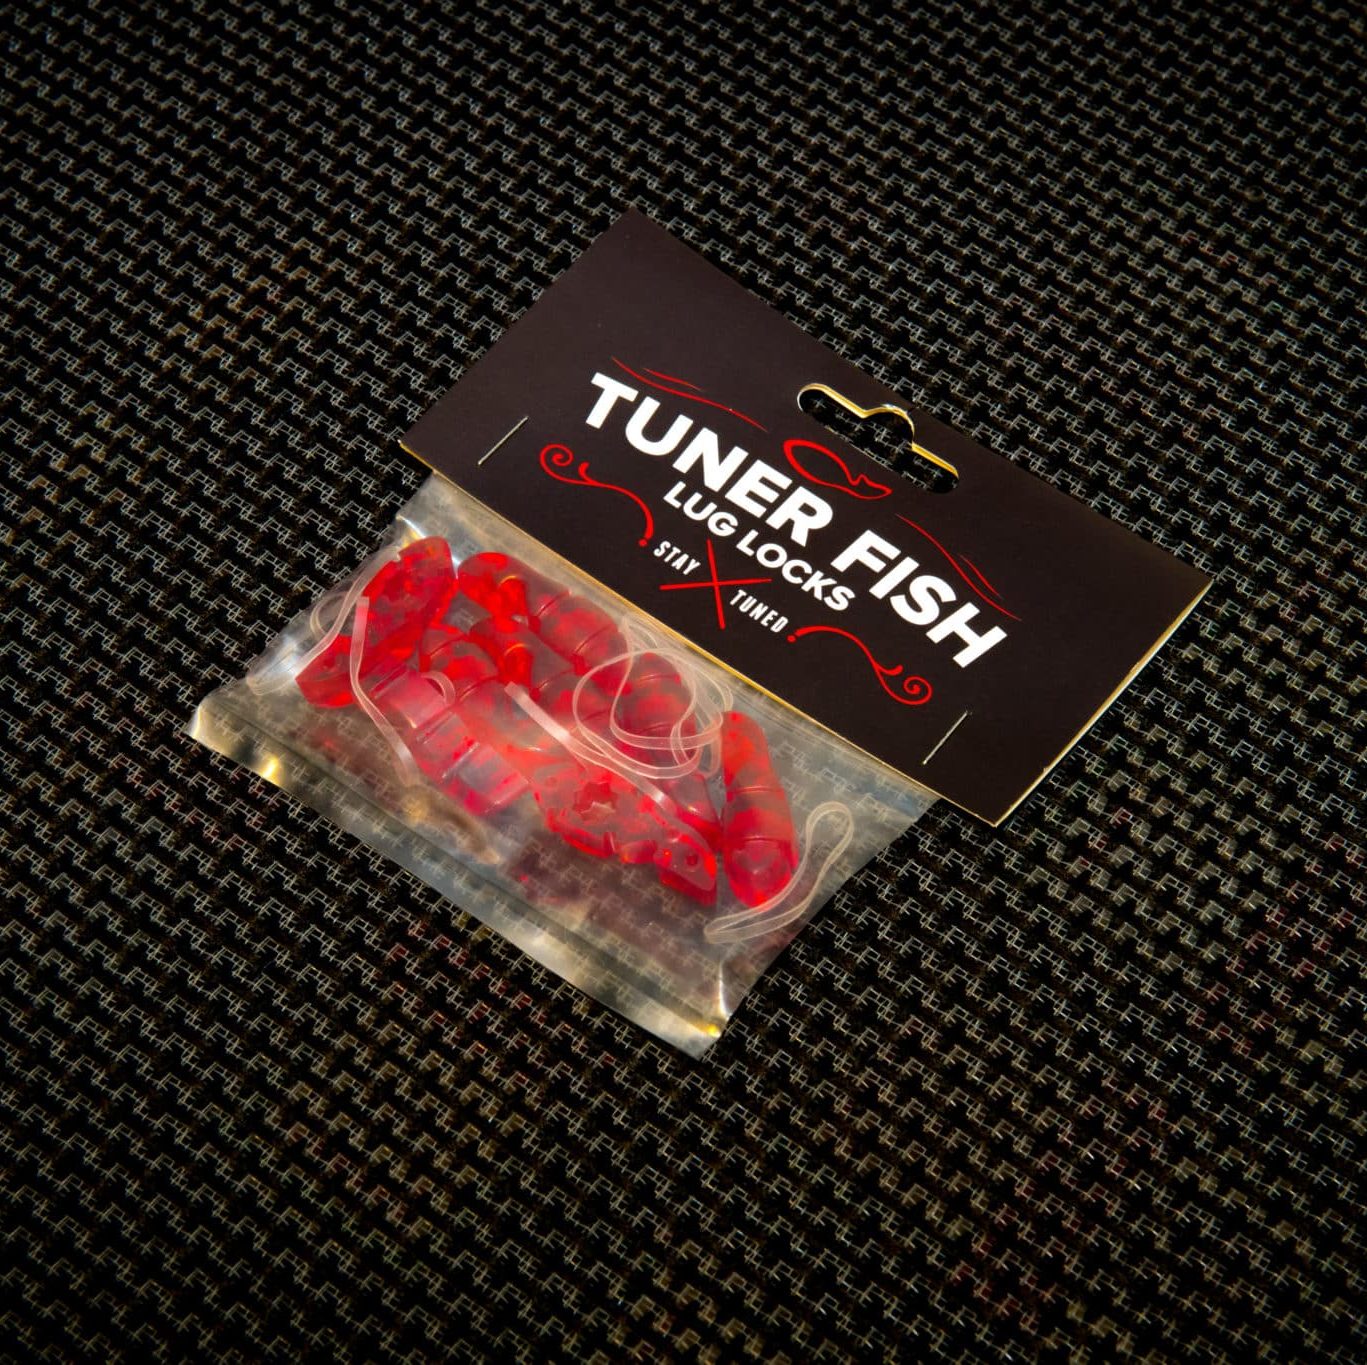 Tuner Fish Lug Locks Red 8 Pack